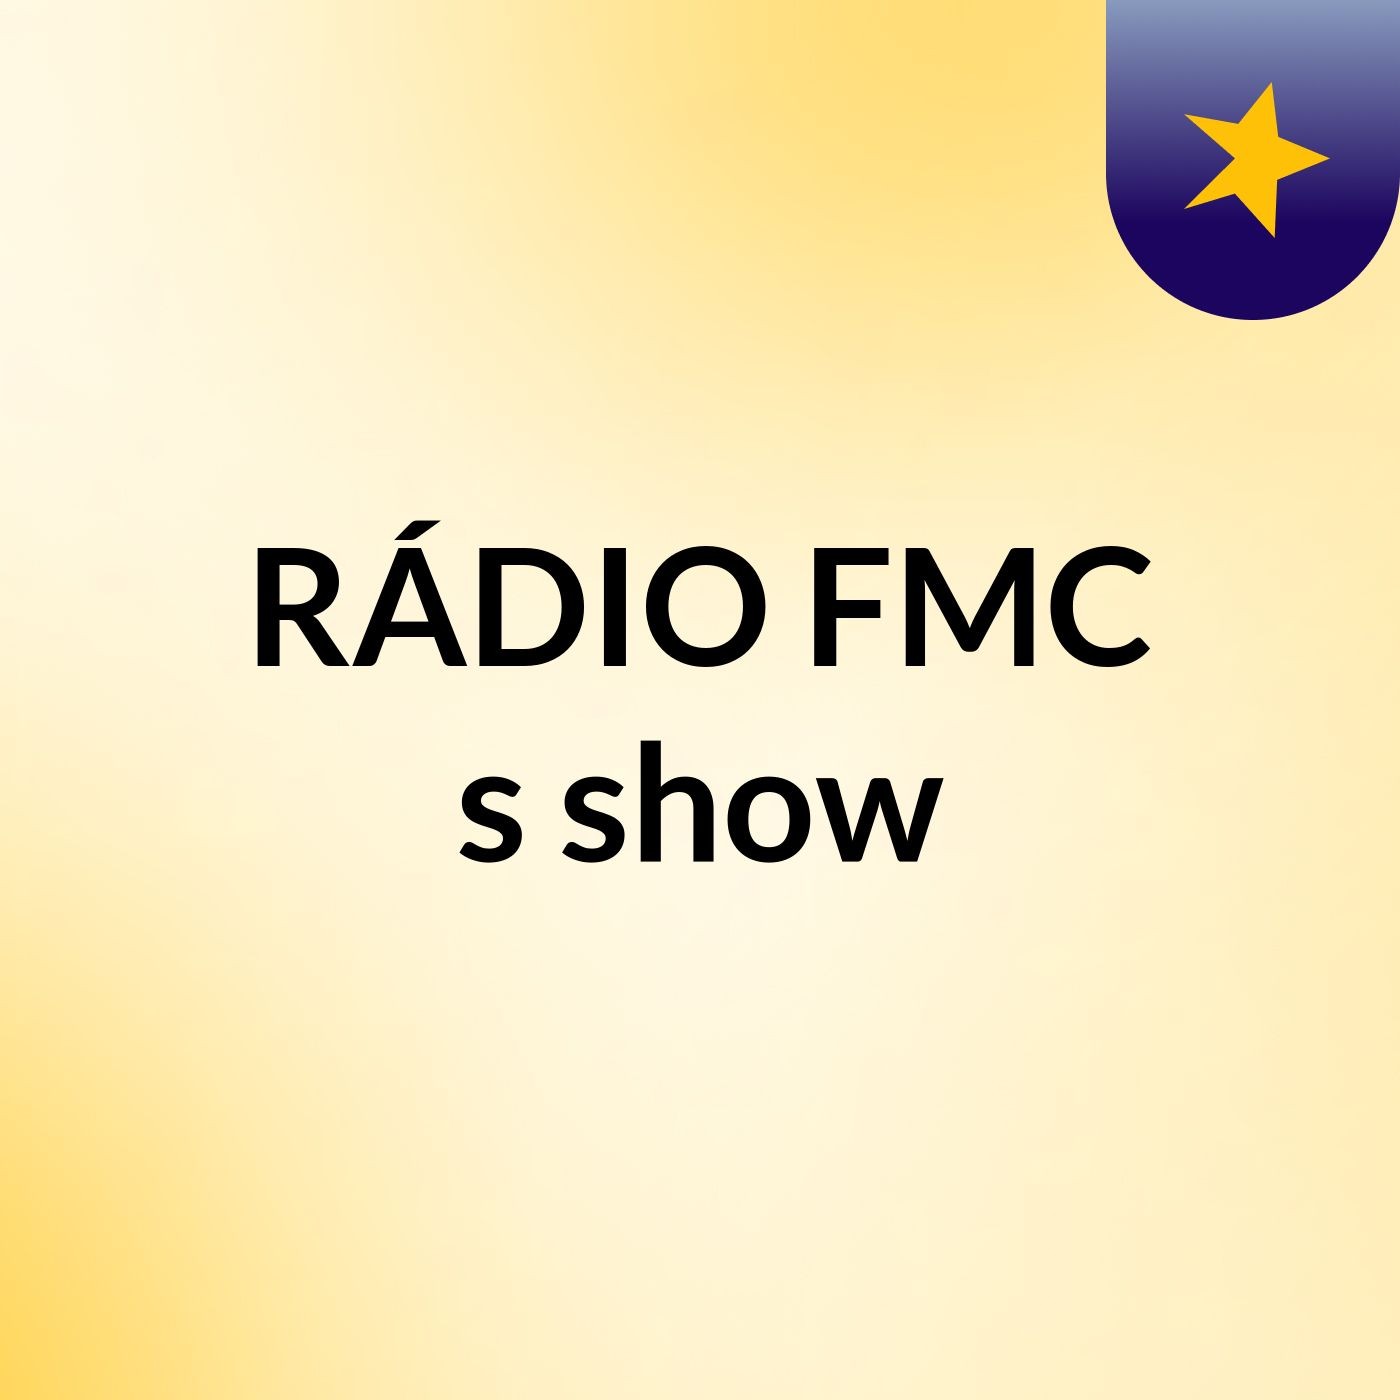 RÁDIO FMC's show